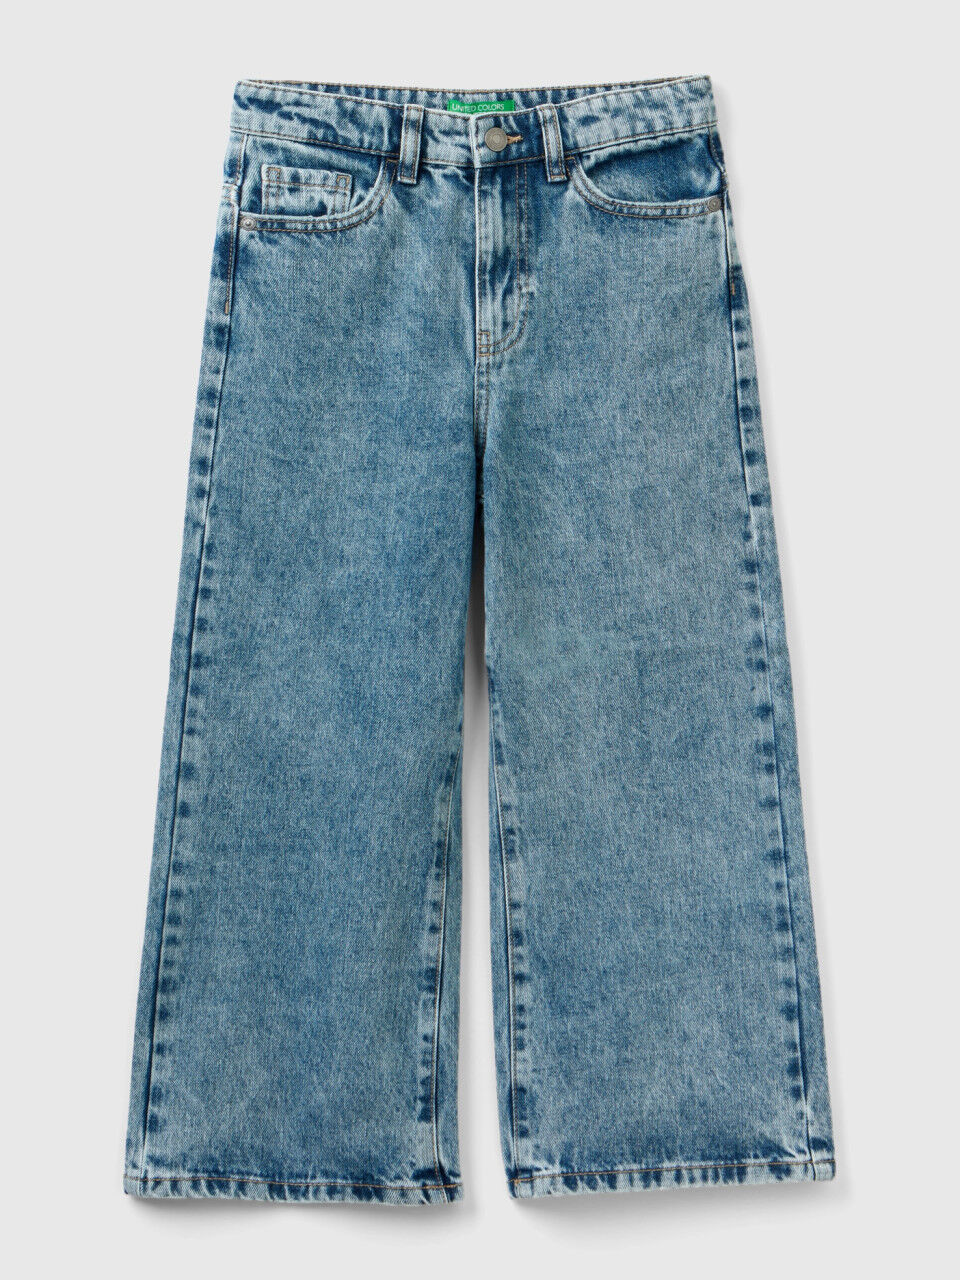 Zara Kids Blue Striped Pull-on Jeans Girls Size 10 Skinny Leg Stretch | eBay